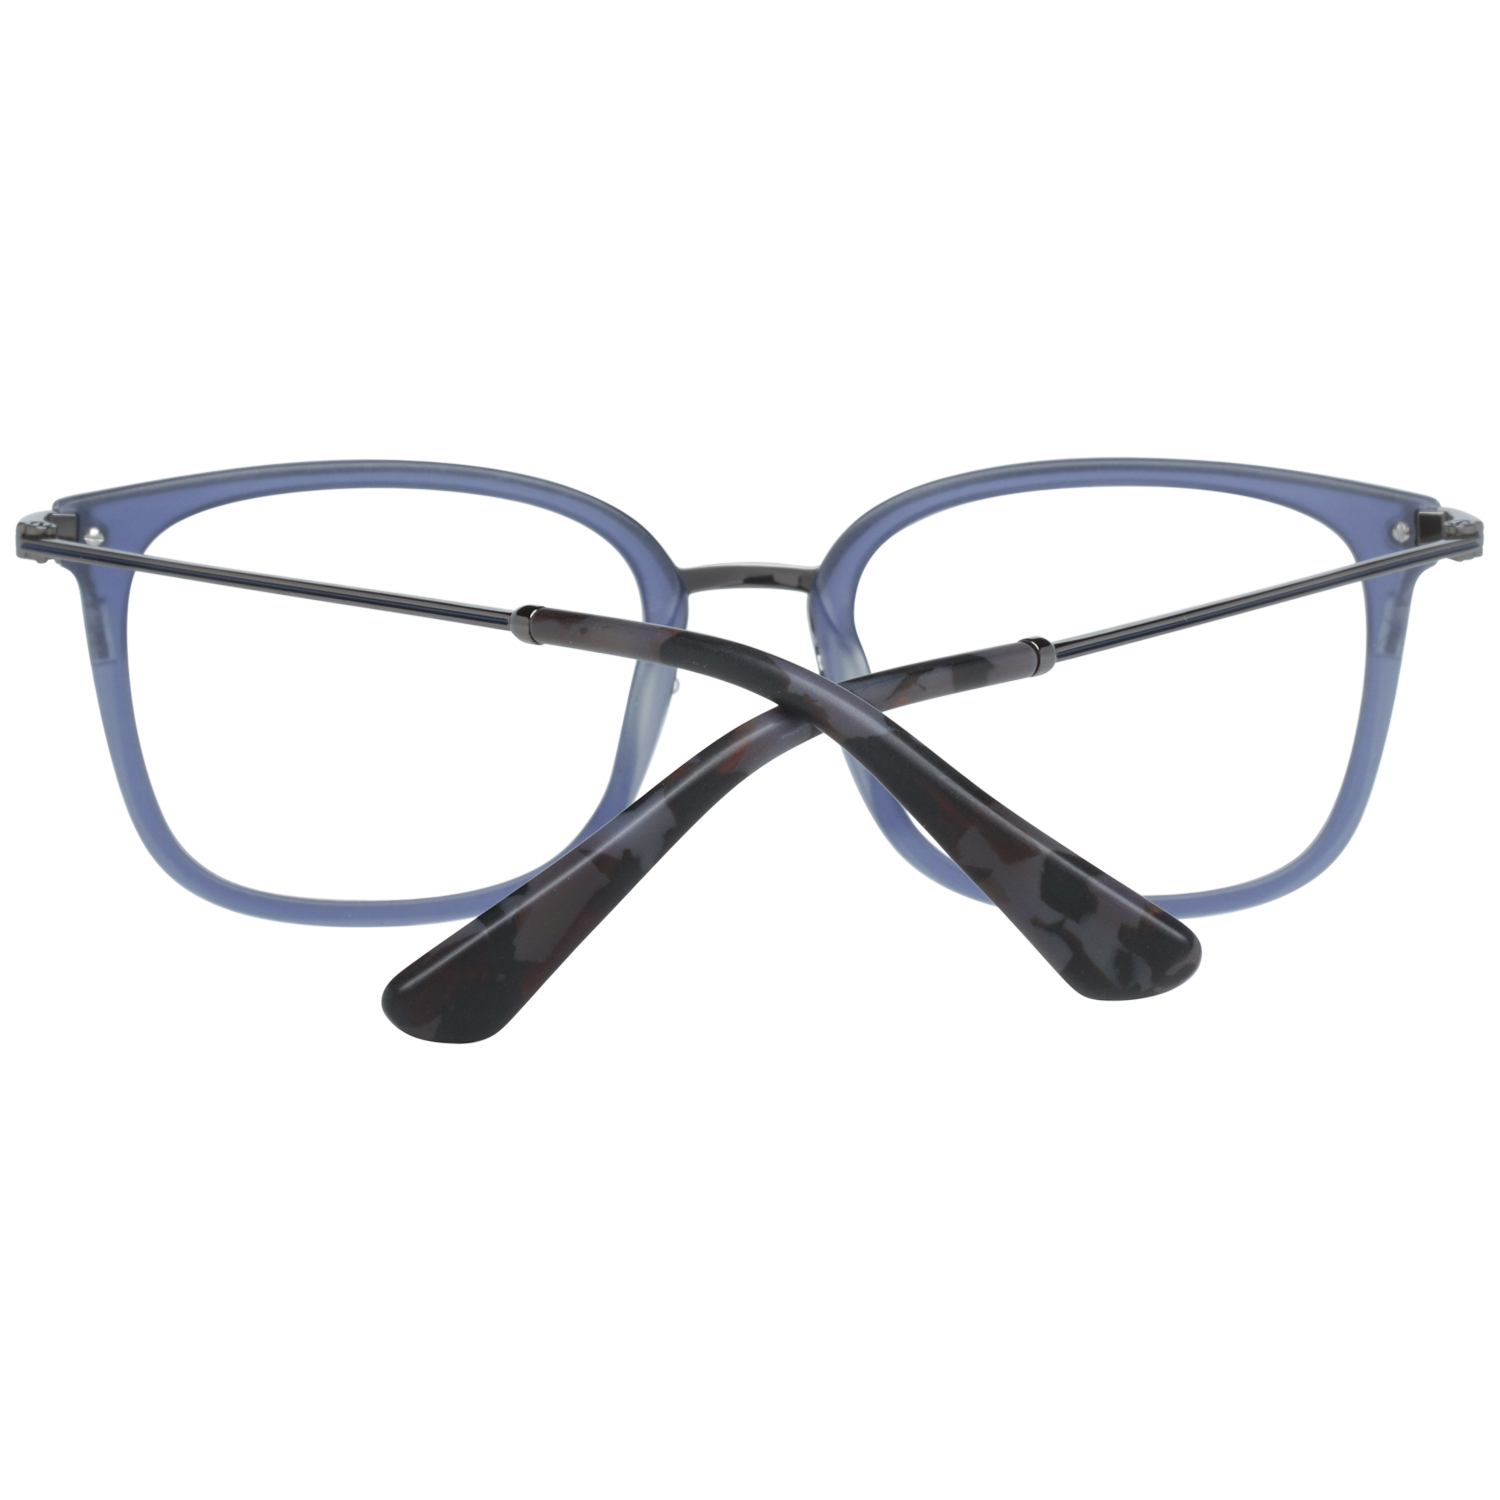 Police Frames Police Glasses Frames VPL561 955M 51 Eyeglasses Eyewear UK USA Australia 